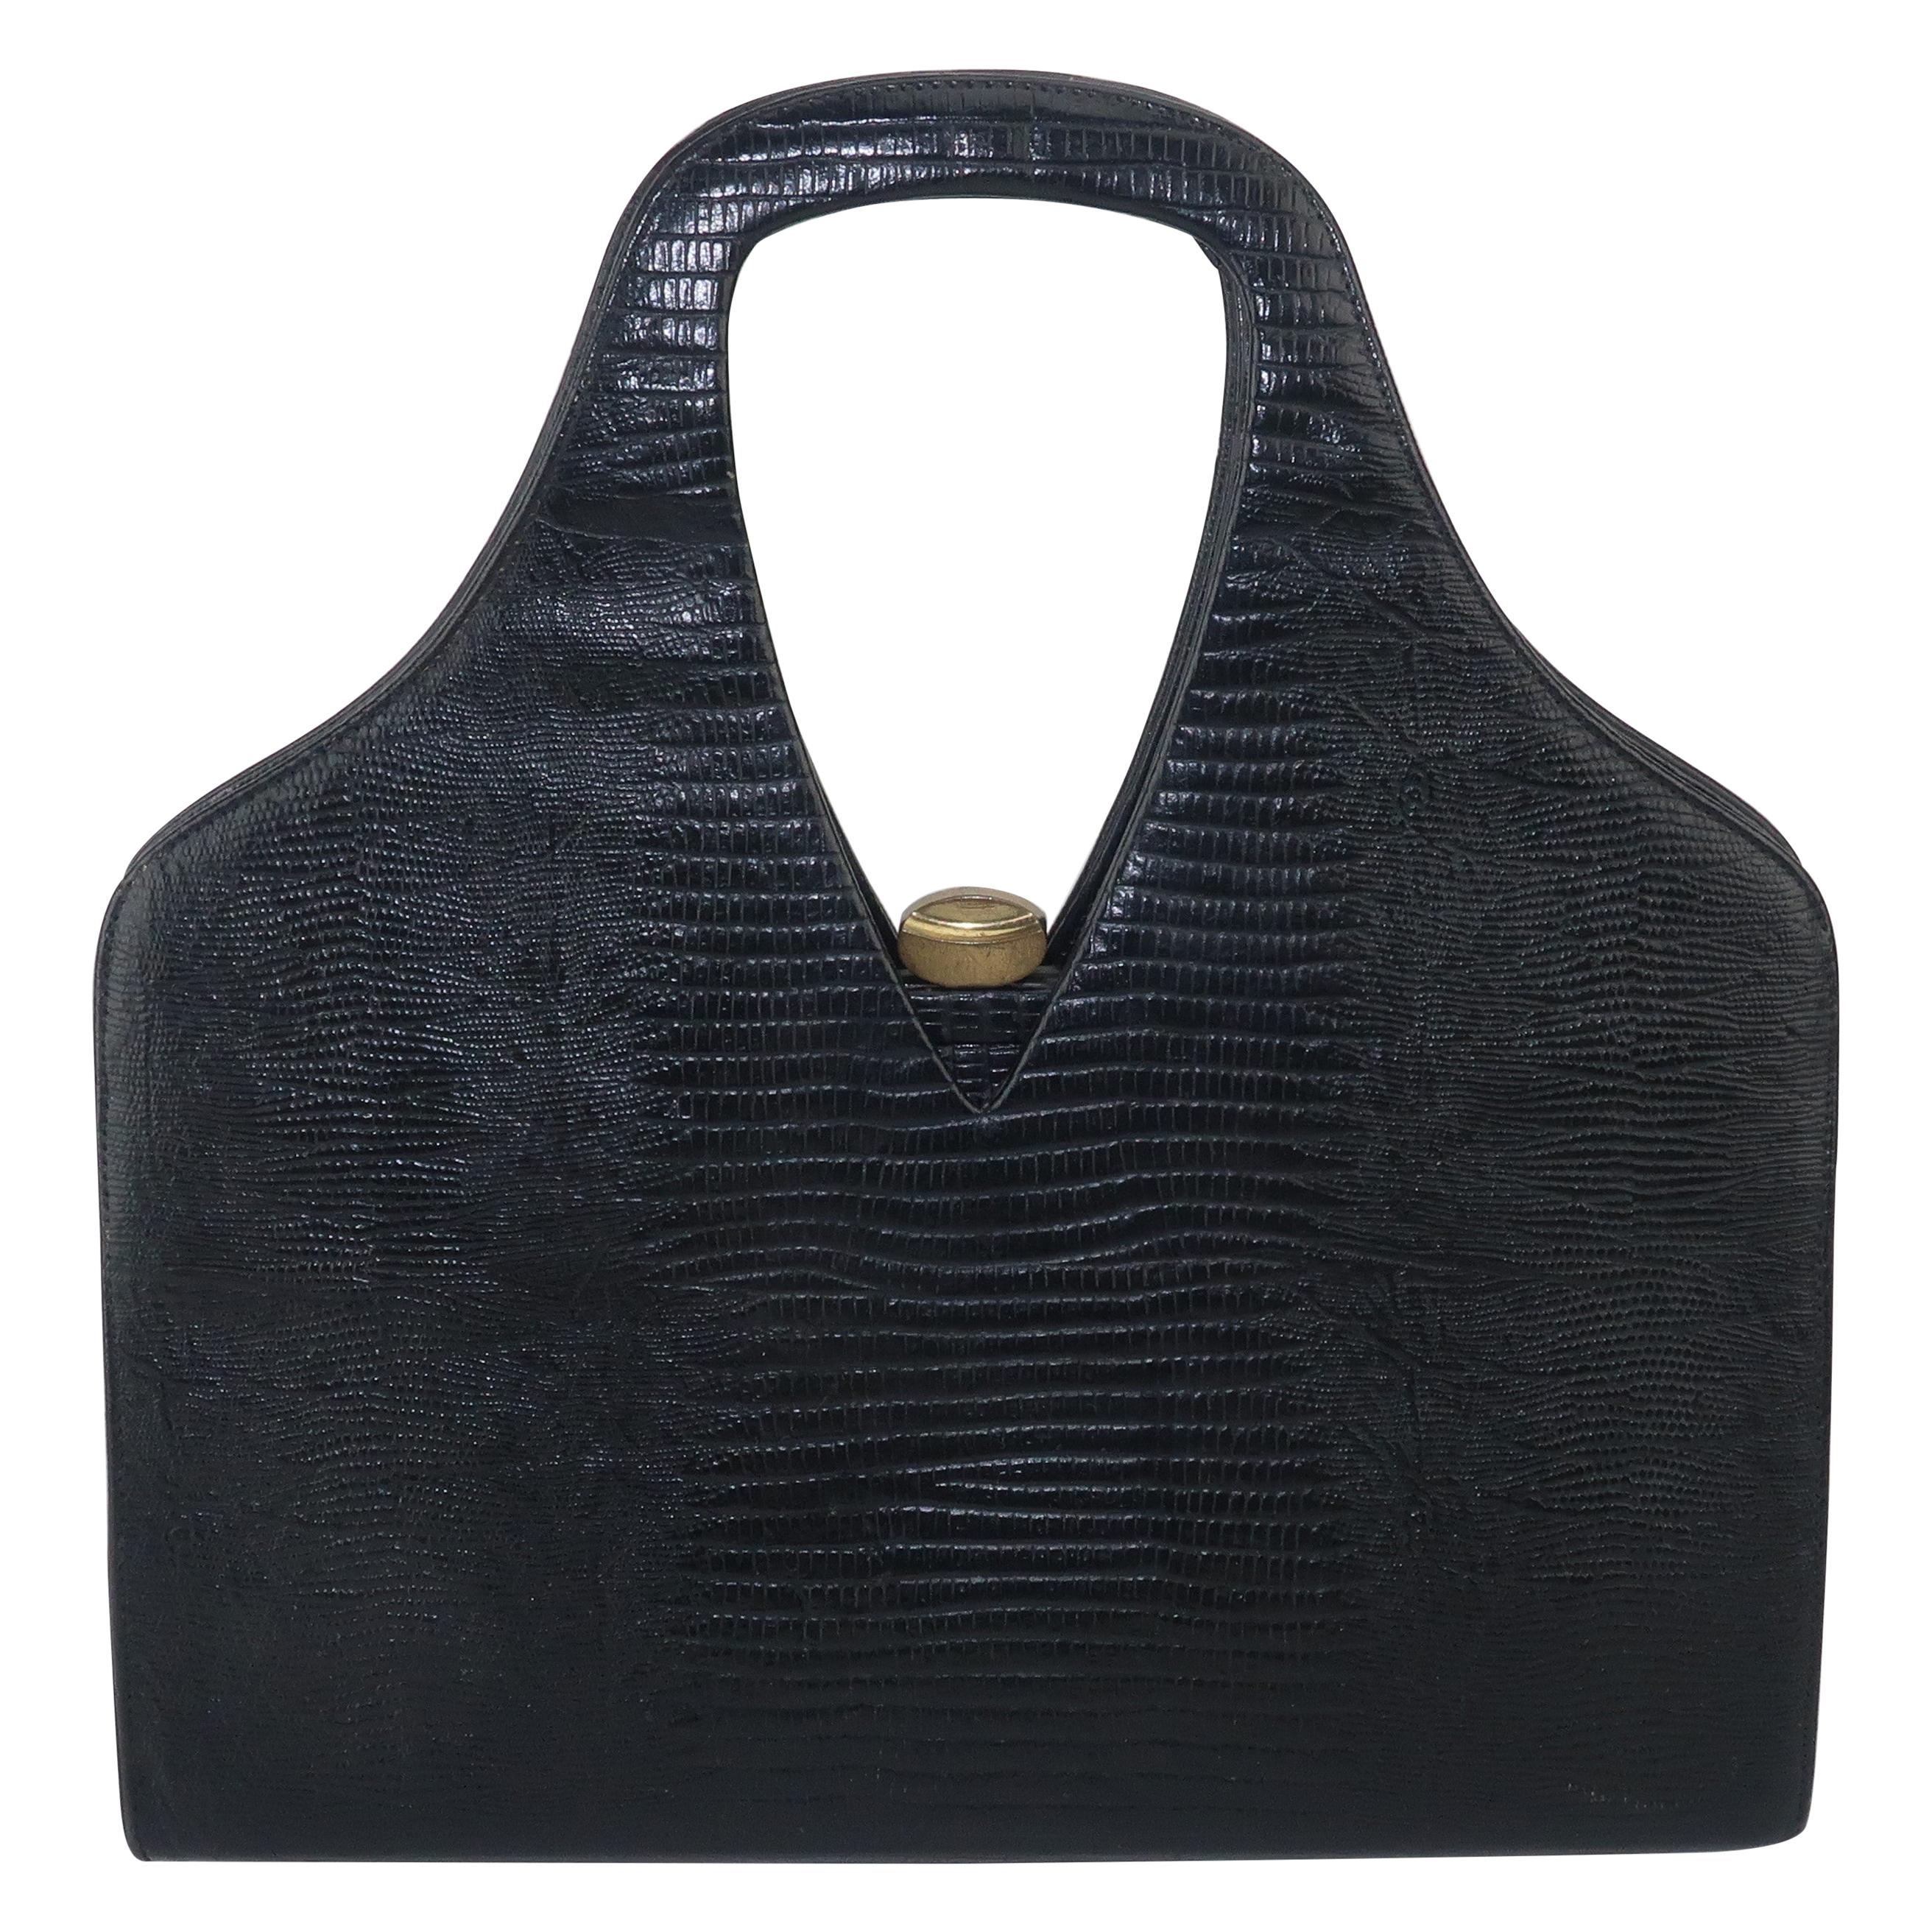 Koro Creation Black Lizard Skin Handbag, 1950's